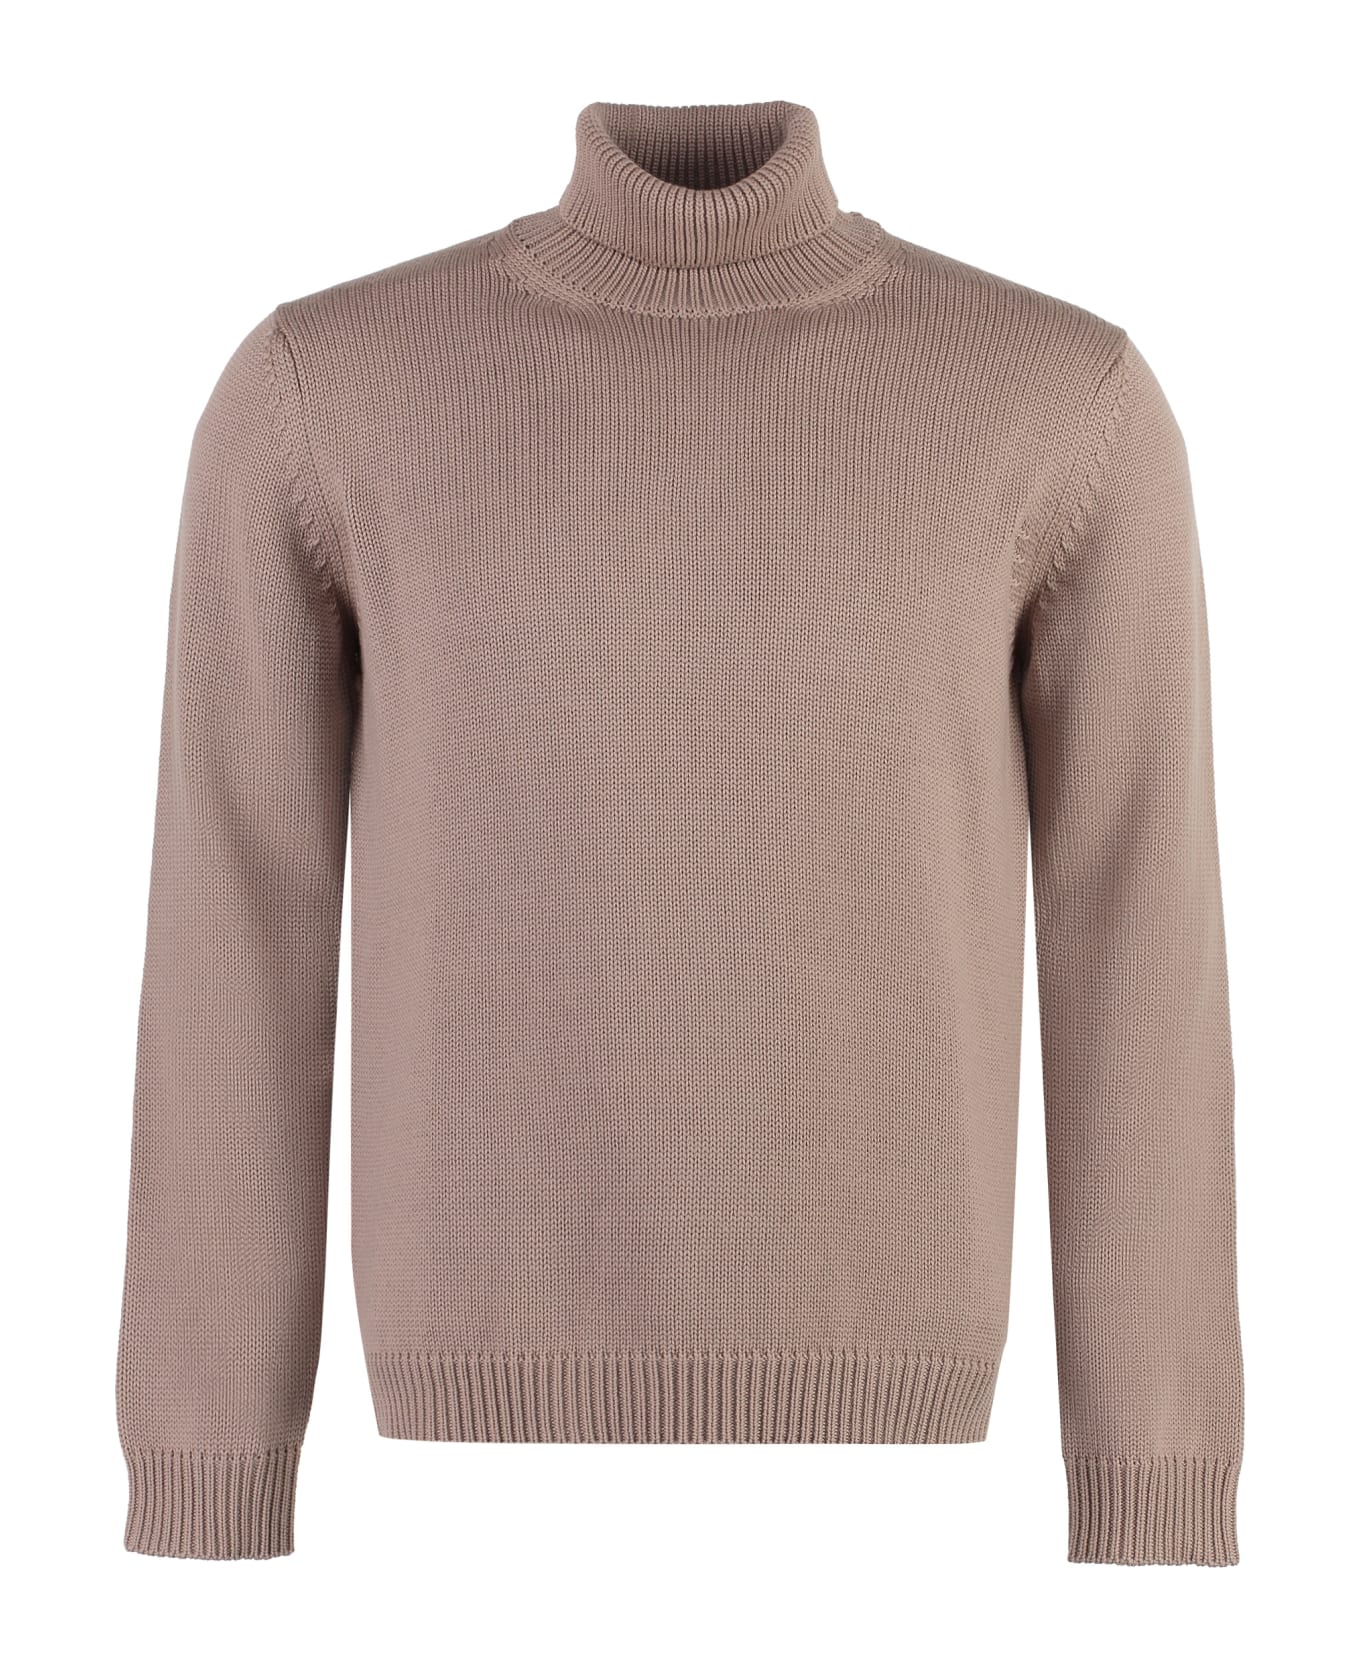 Roberto Collina Turtleneck Merino Wool Sweater - Pale pink